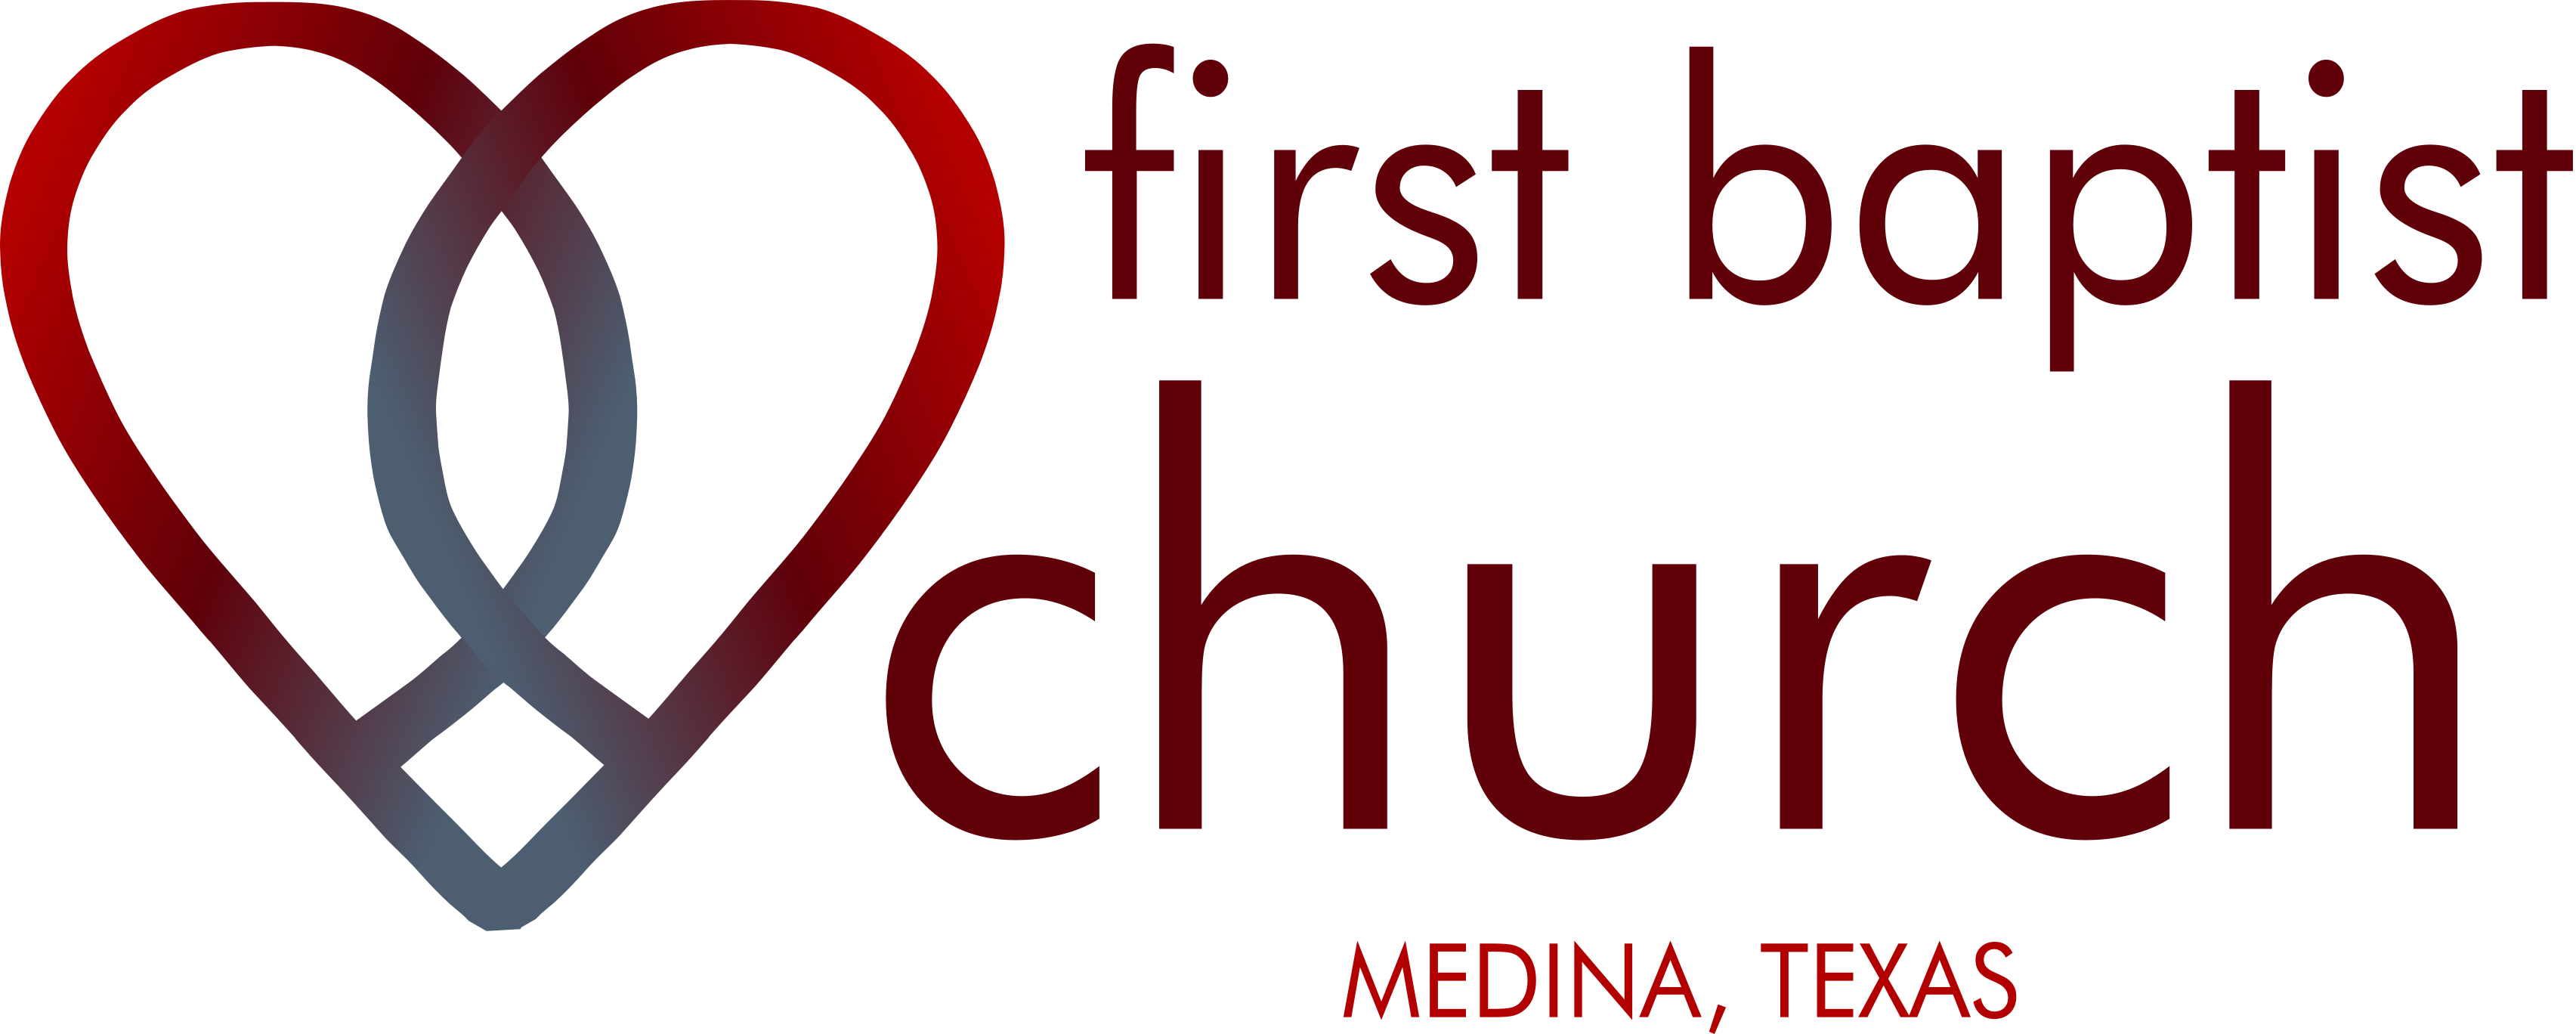 First Baptist Church Medina, Texas - Logo